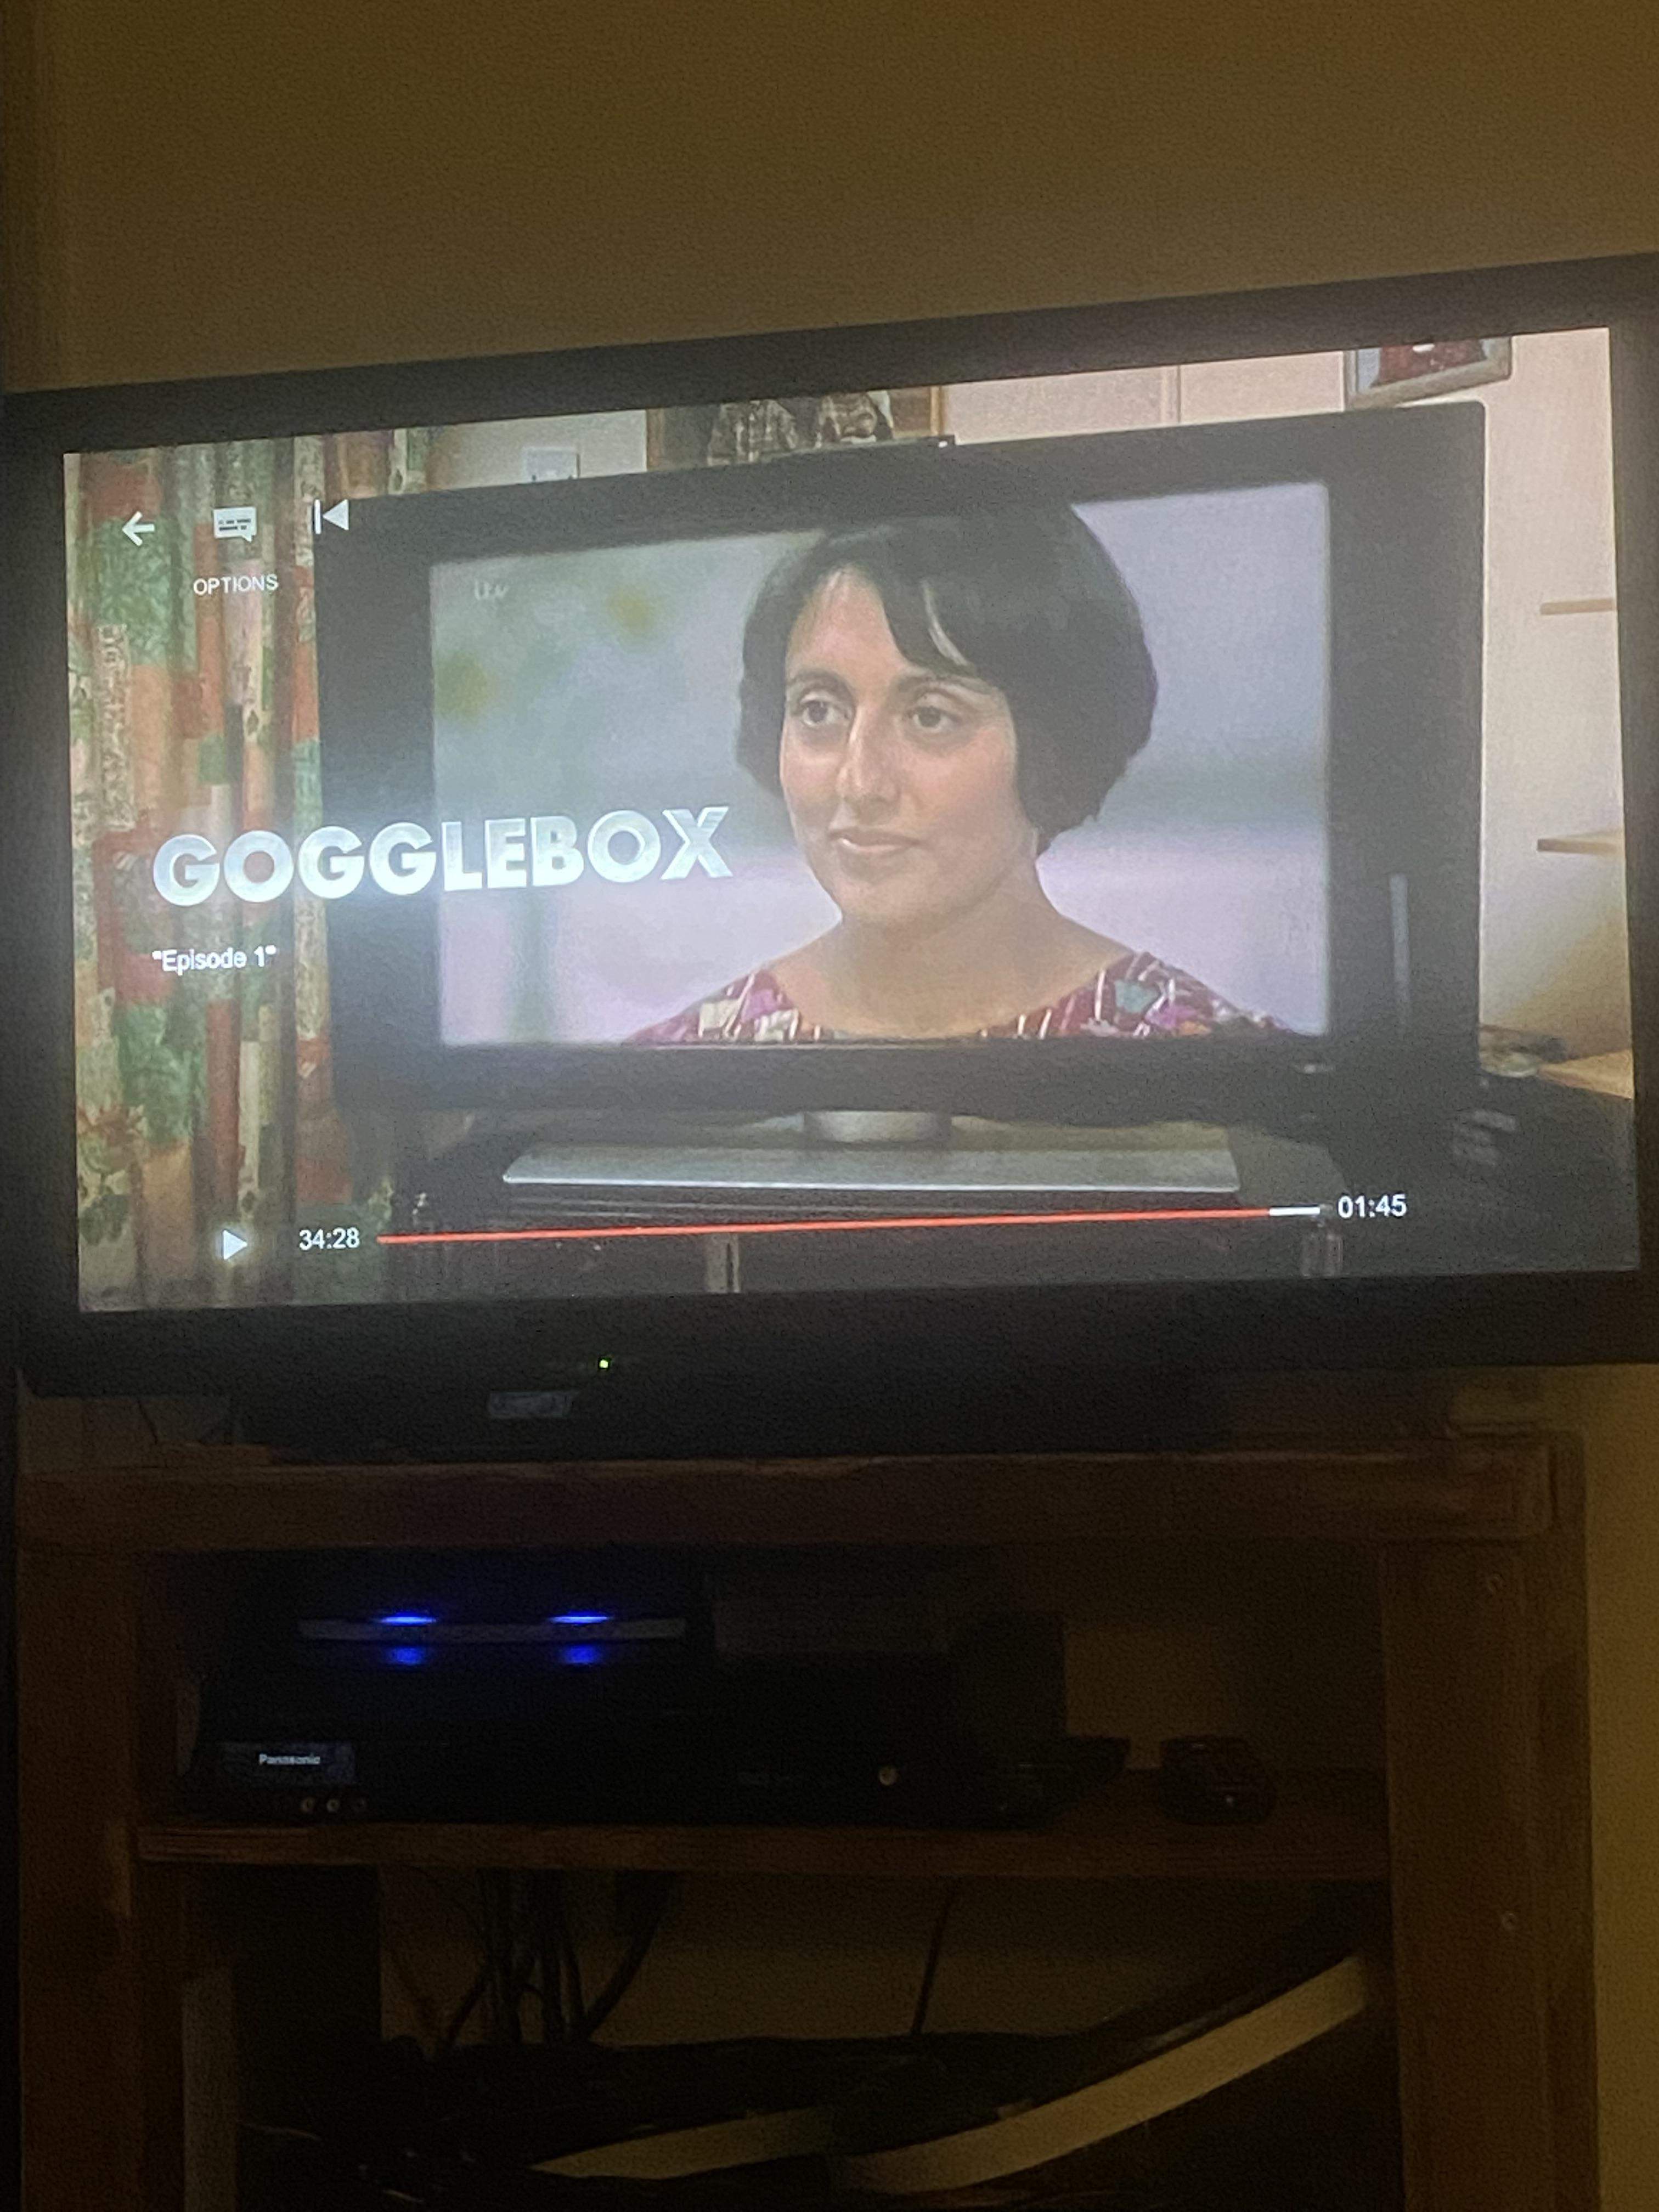 Netfix and Gogglebox -Bini makes it to the screens